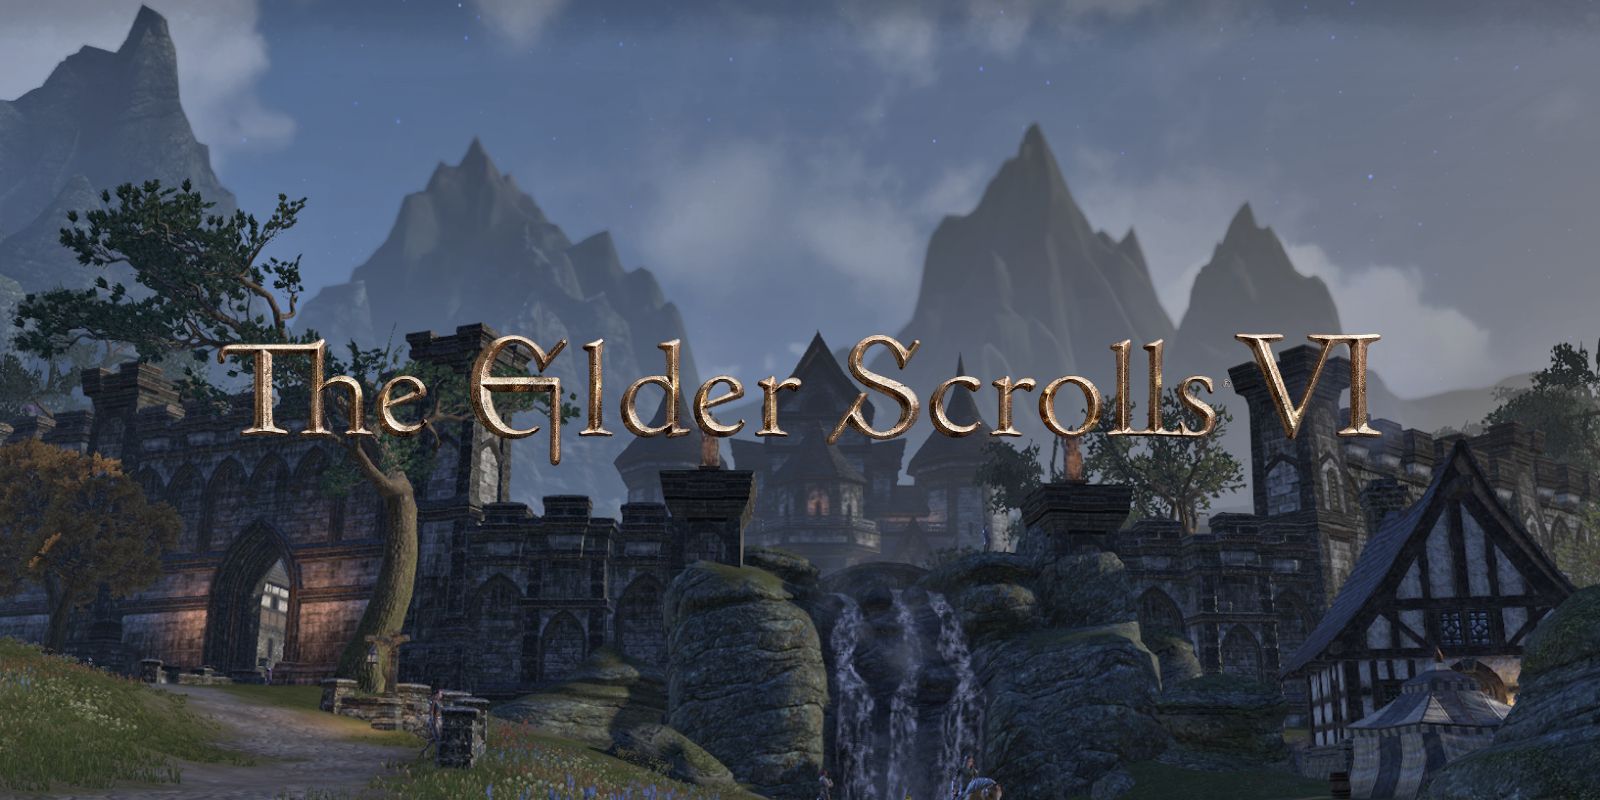 The Elder Scrolls VI: Hammerfell - Cinematic Trailer 